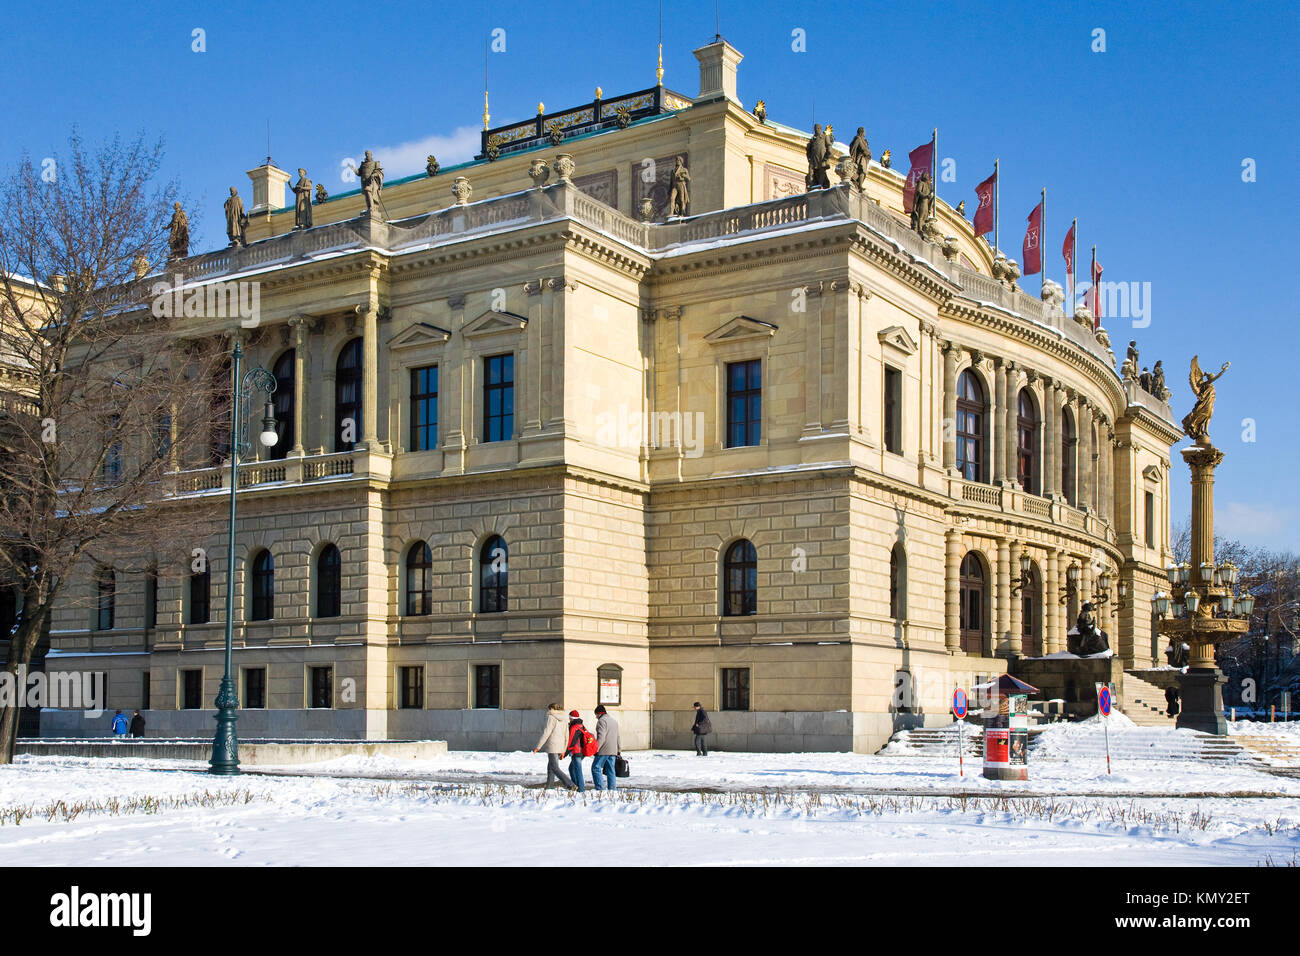 Rudolfinum, Alsovo nabrezi, Stare Mesto (UNESCO), Praha, Ceska republika / Rudolfinum, città vecchia, Praga, Repubblica Ceca Foto Stock